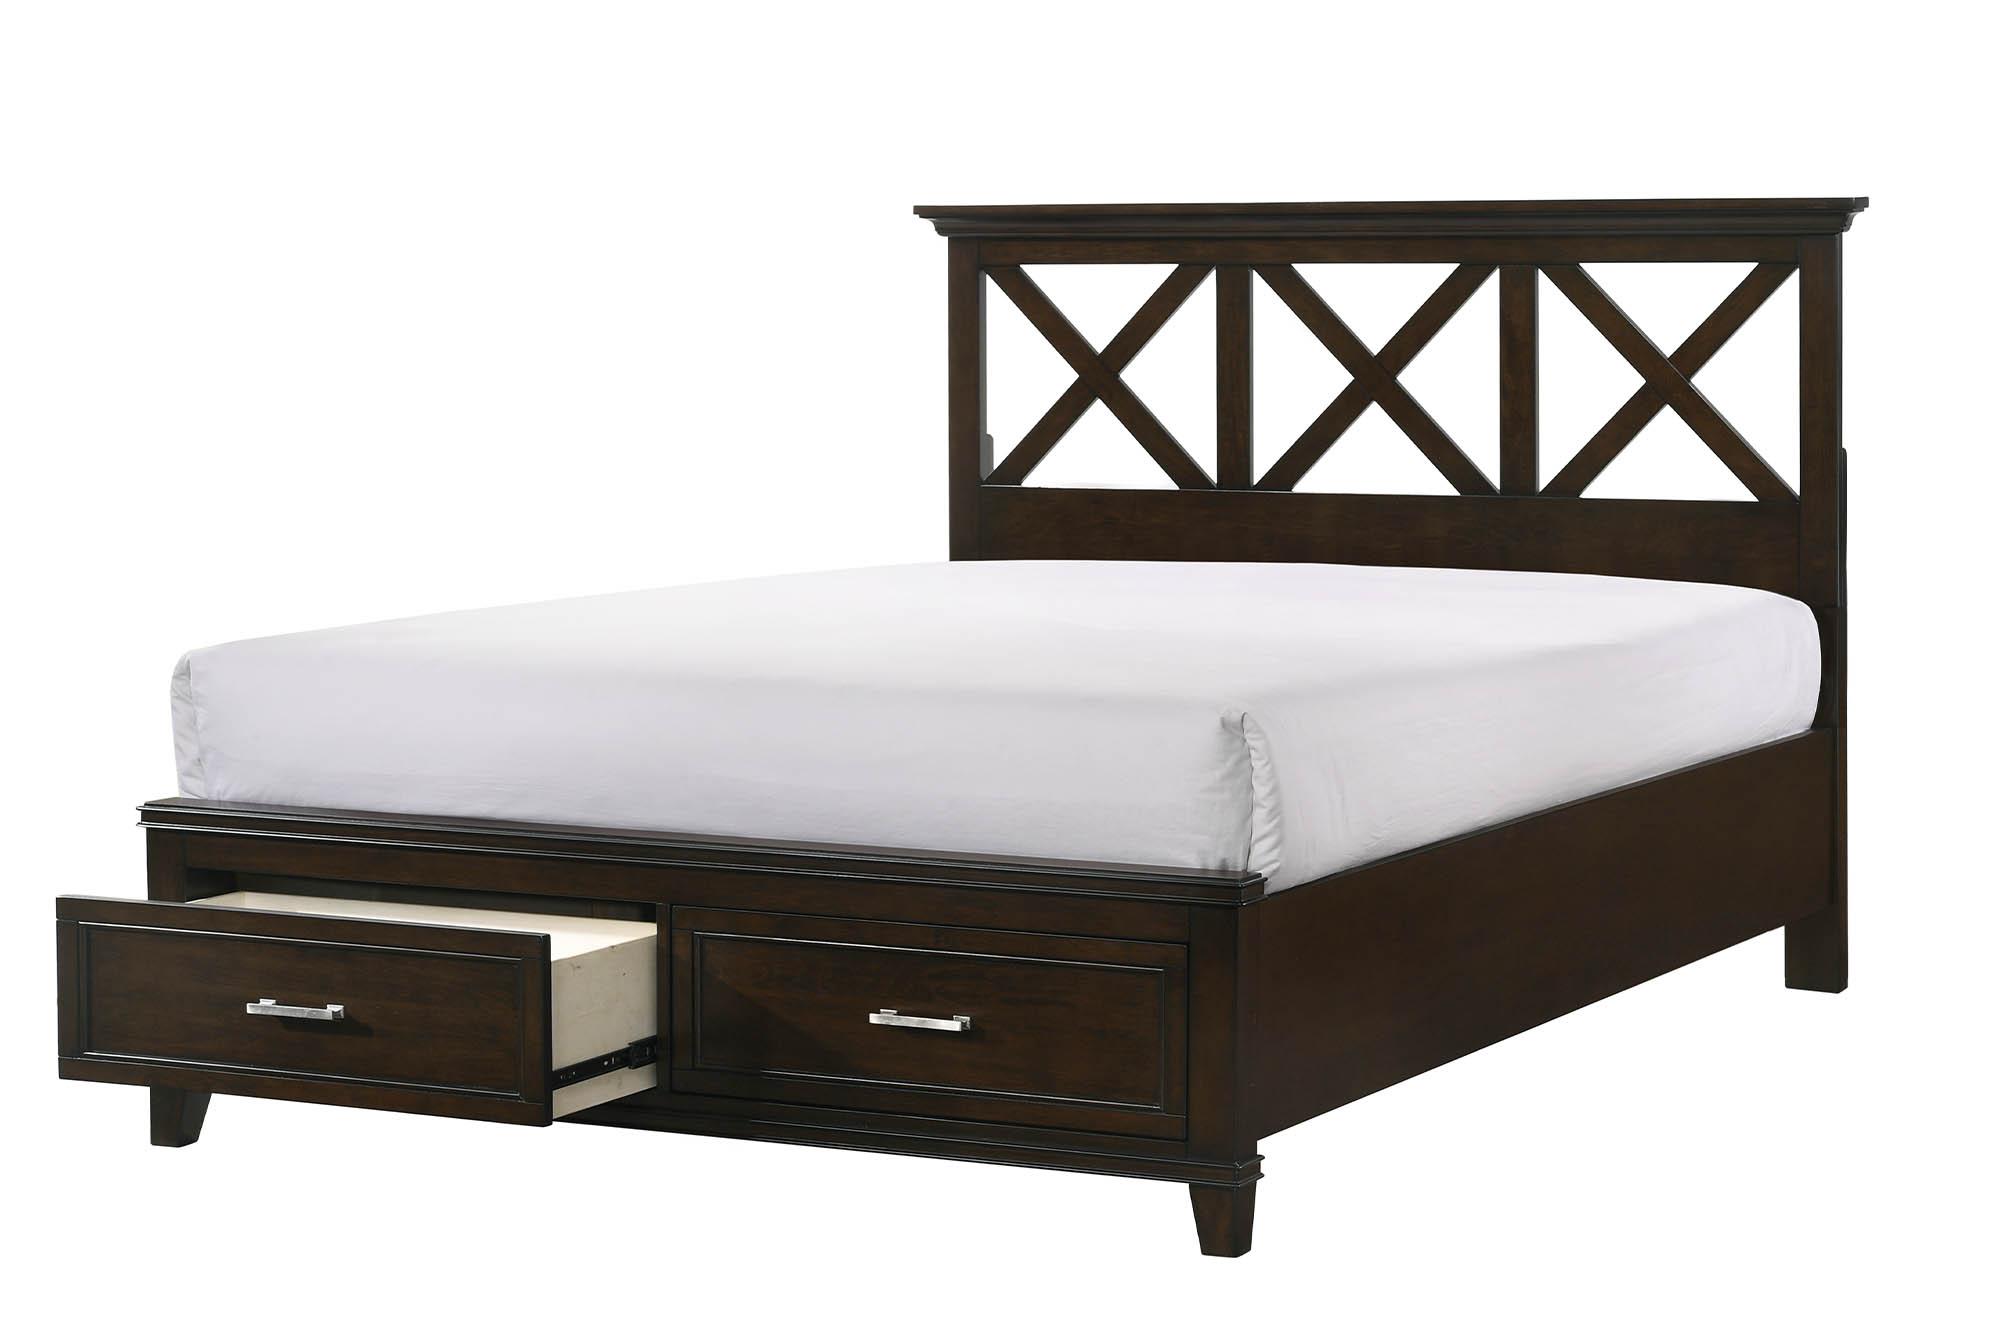 Modern, Transitional Storage Bed NOVA II 1282-105 1282-105 in Cherry 